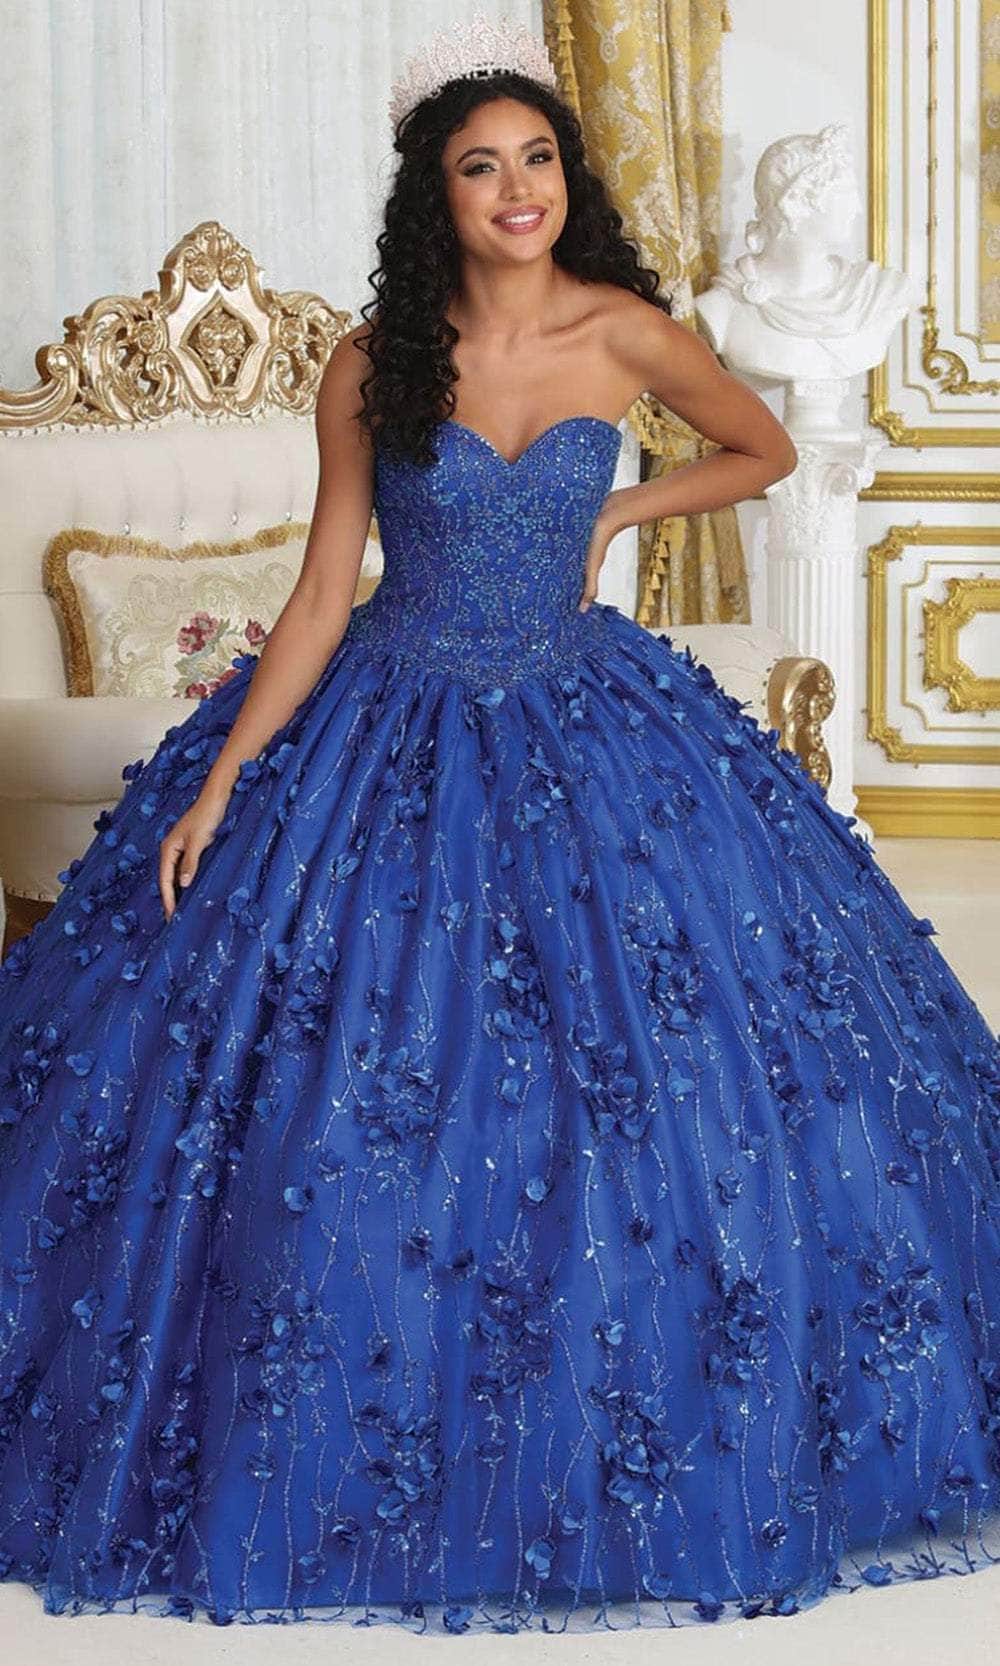 May Queen LK217 - Applique Sweetheart Ballgown Quinceanera Dresses 4 / Royal Blue